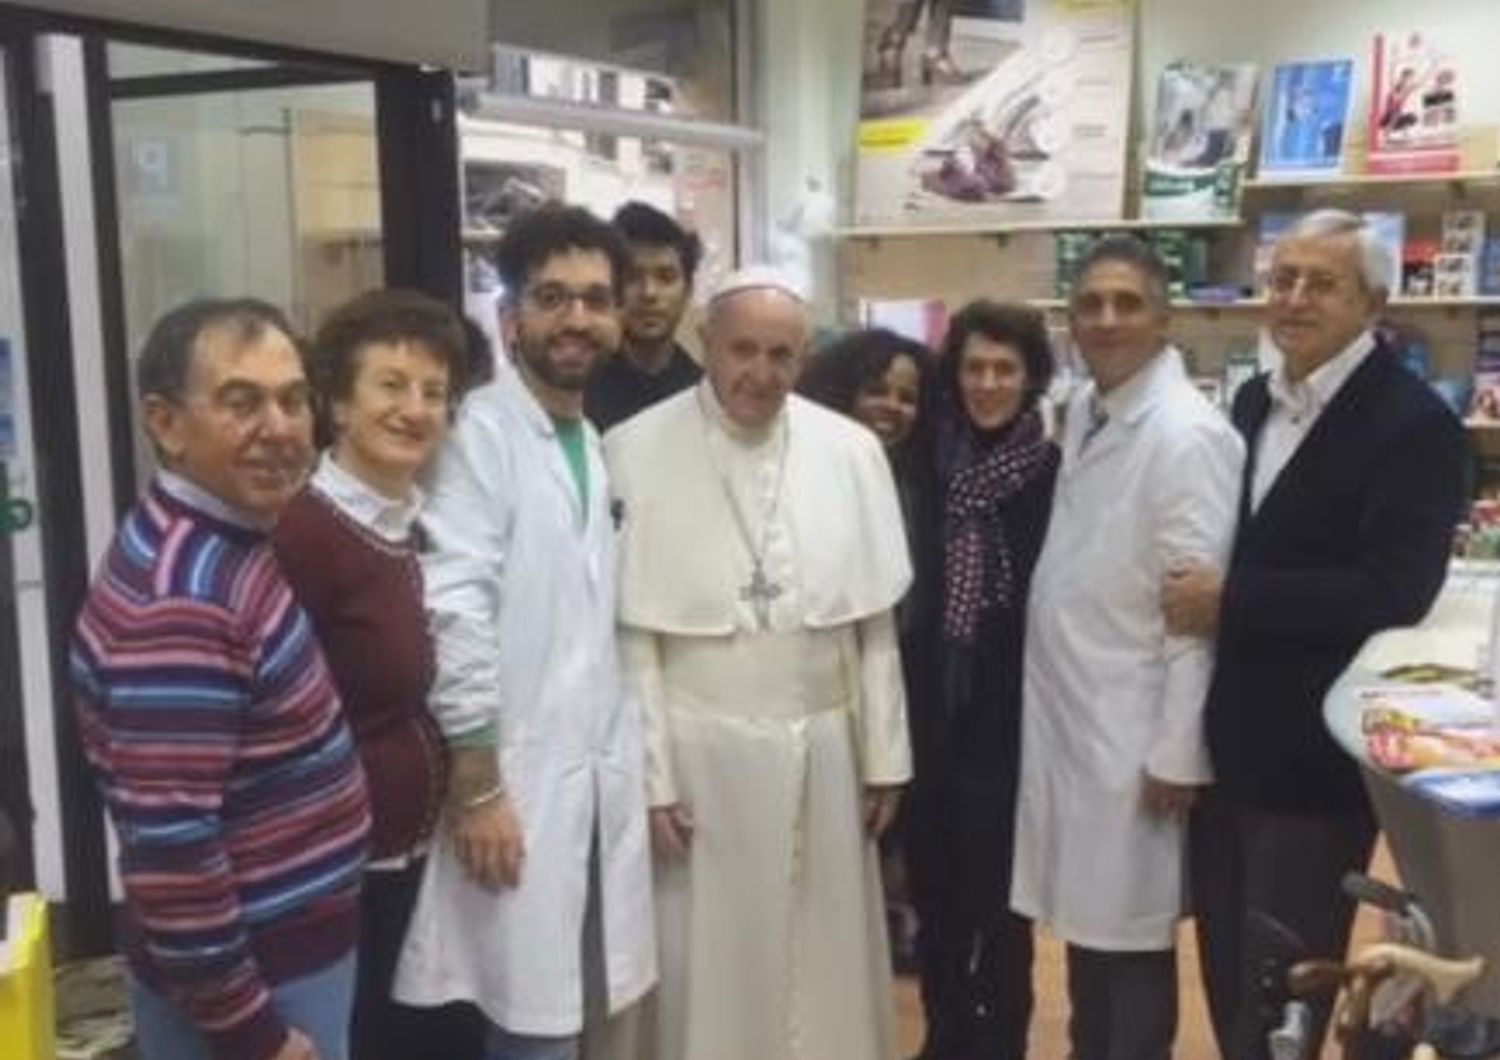 Papa Francesco in farmacia per scarpe nuove (foto da Facebook)&nbsp;